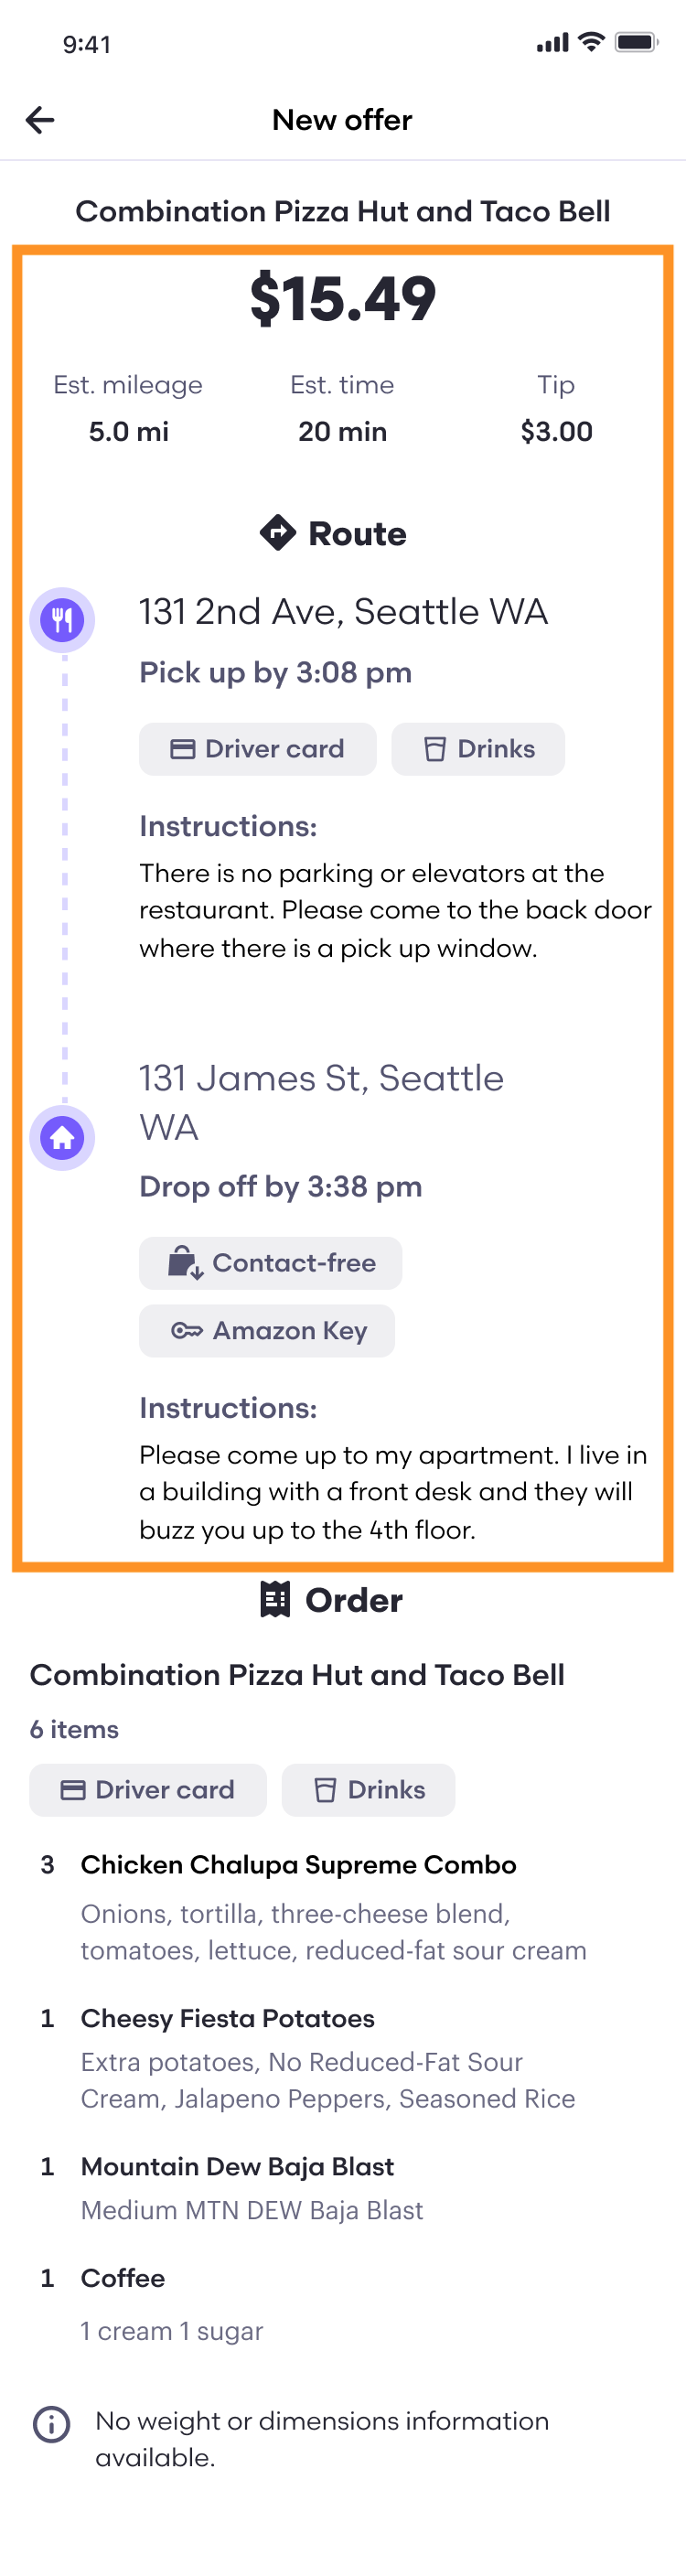 Seattle offer details.png